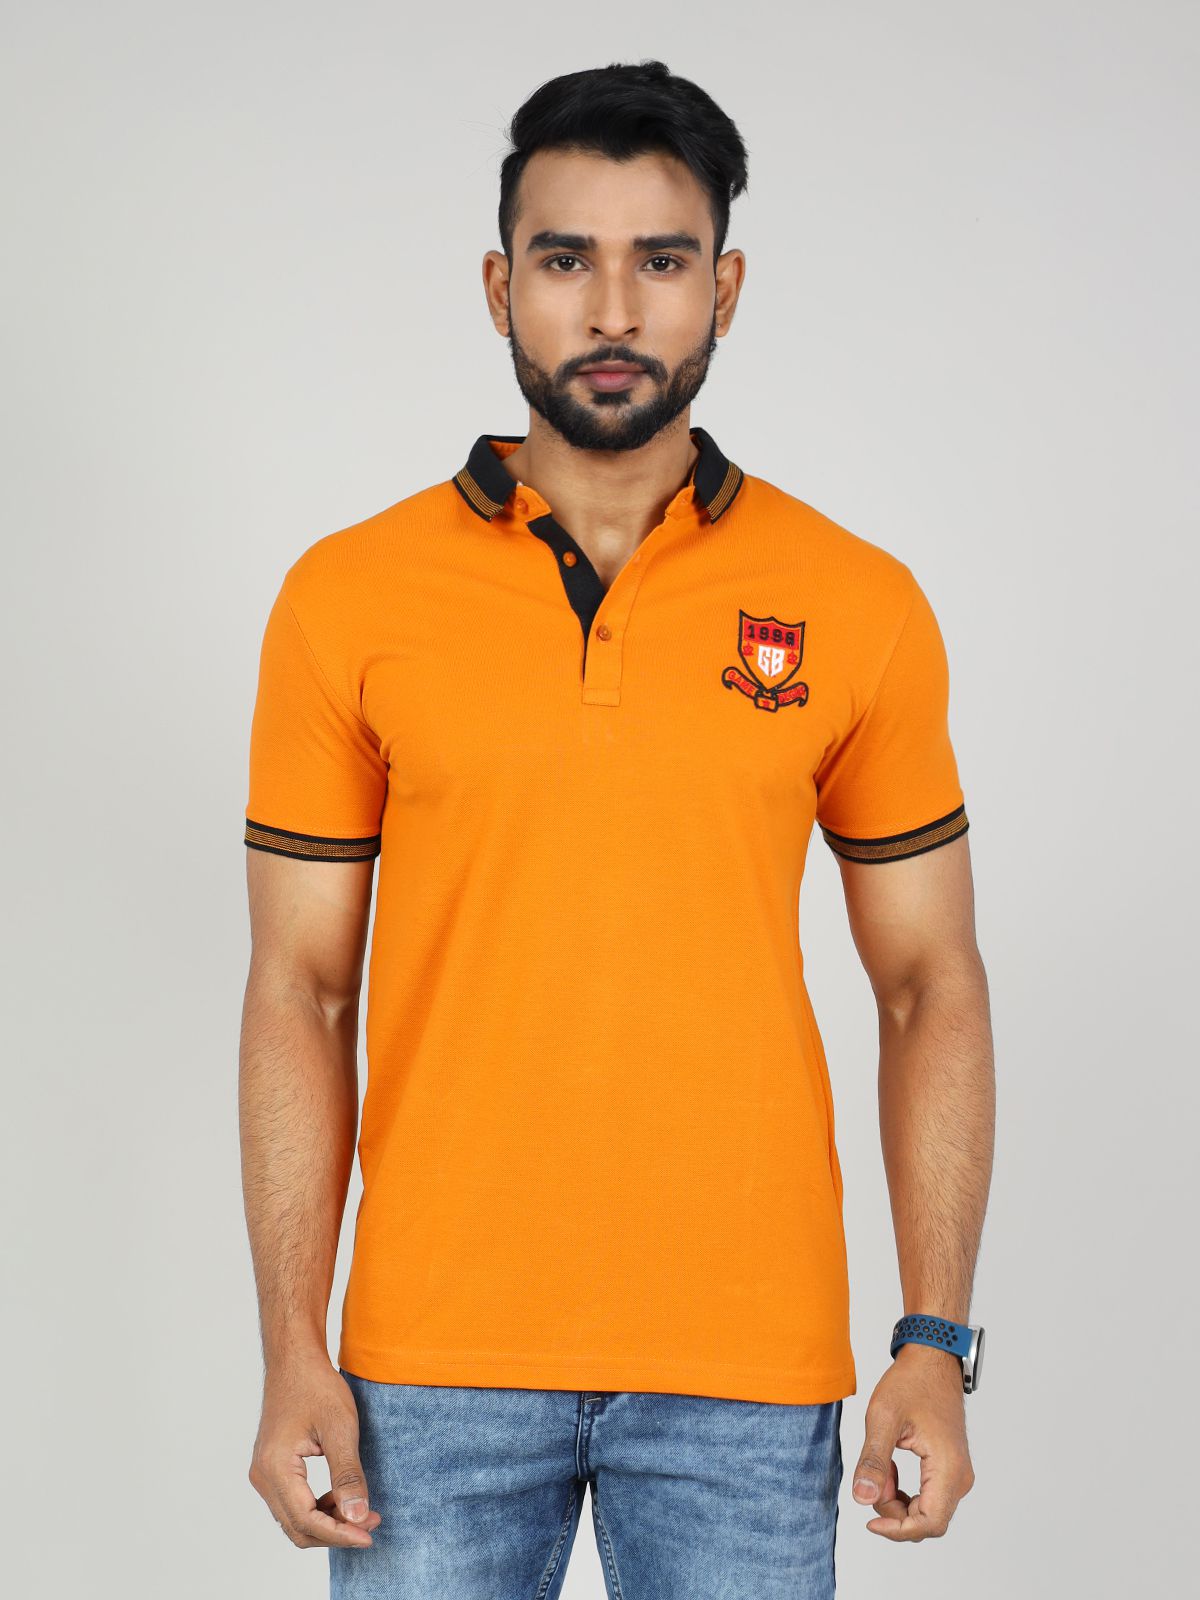     			GAME BEGINS Cotton Slim Fit Solid Half Sleeves Men's Polo T Shirt - Orange ( Pack of 1 )